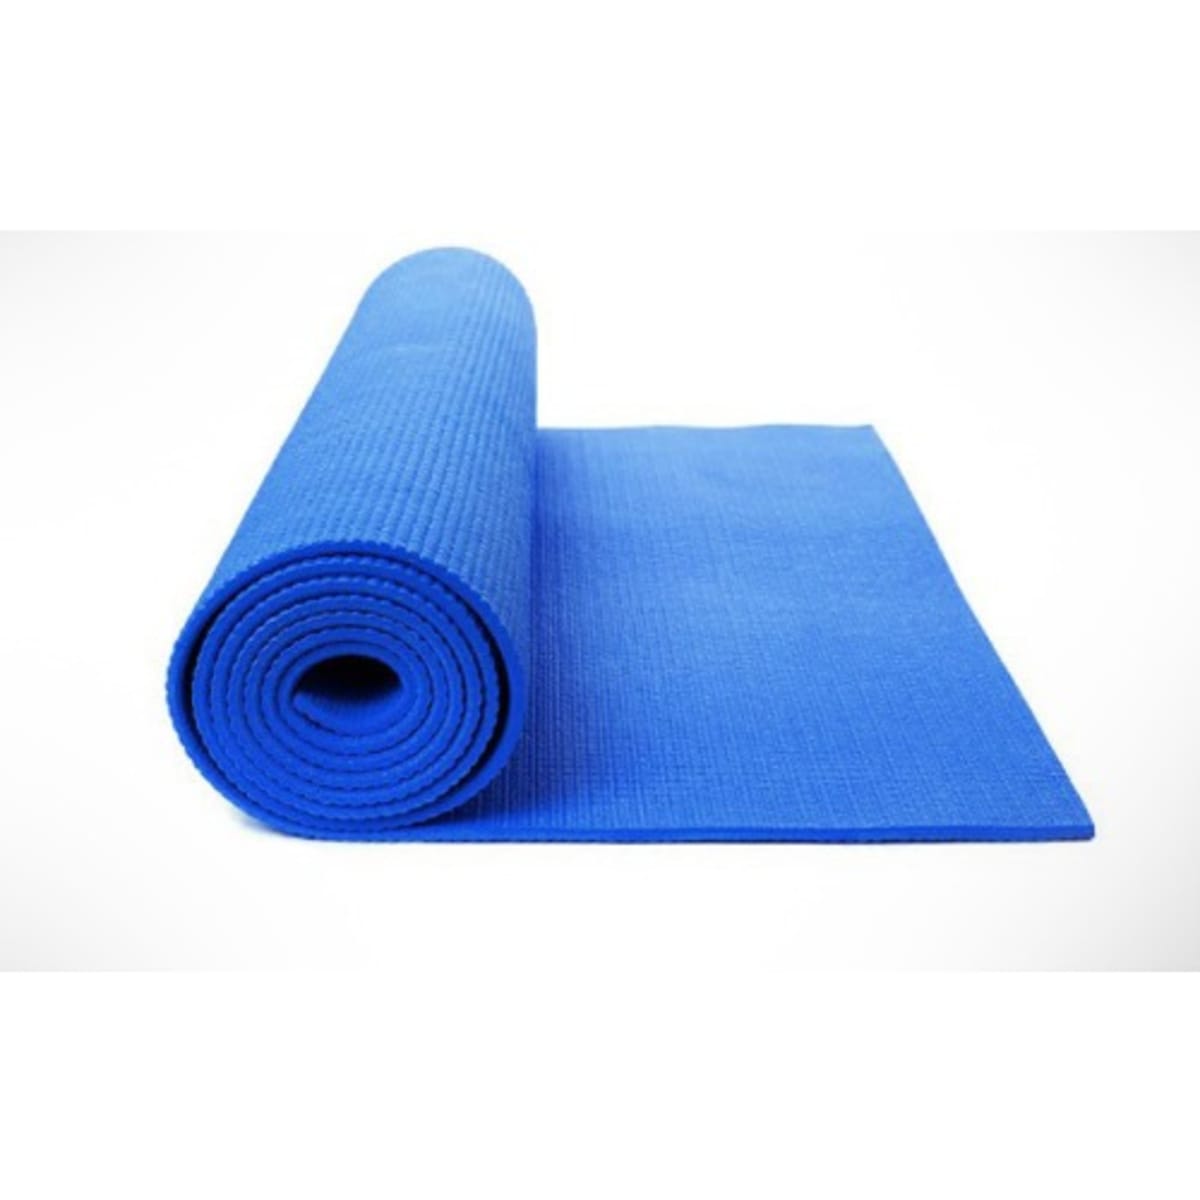 Yoga Exercise Mat - Blue